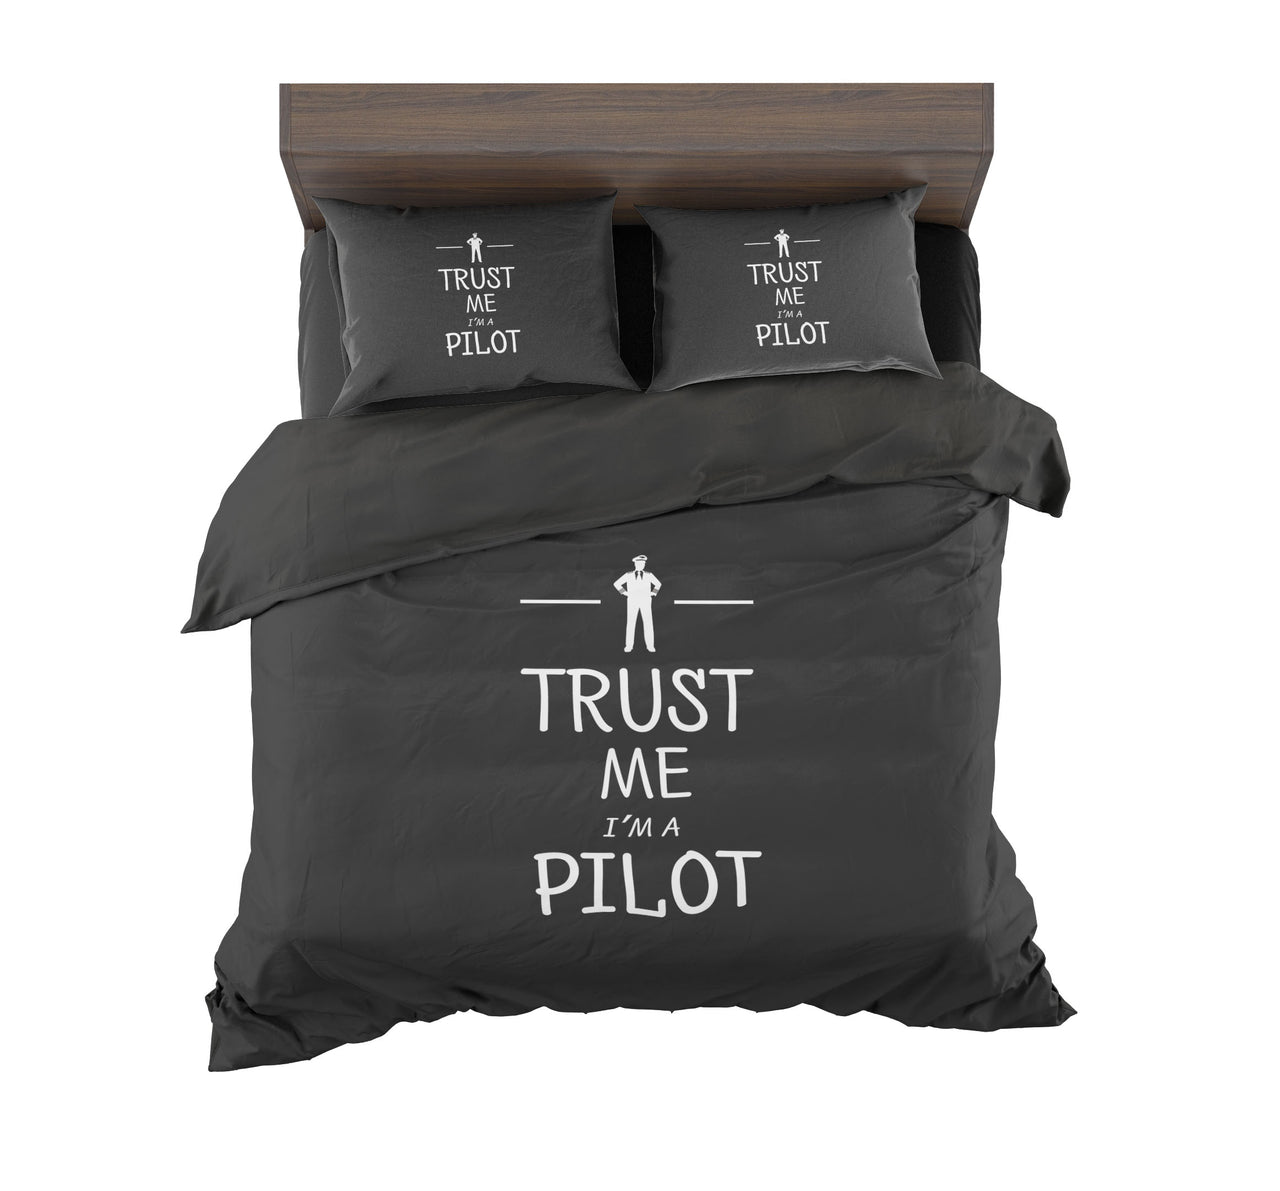 Trust Me I'm a Pilot Designed Bedding Sets